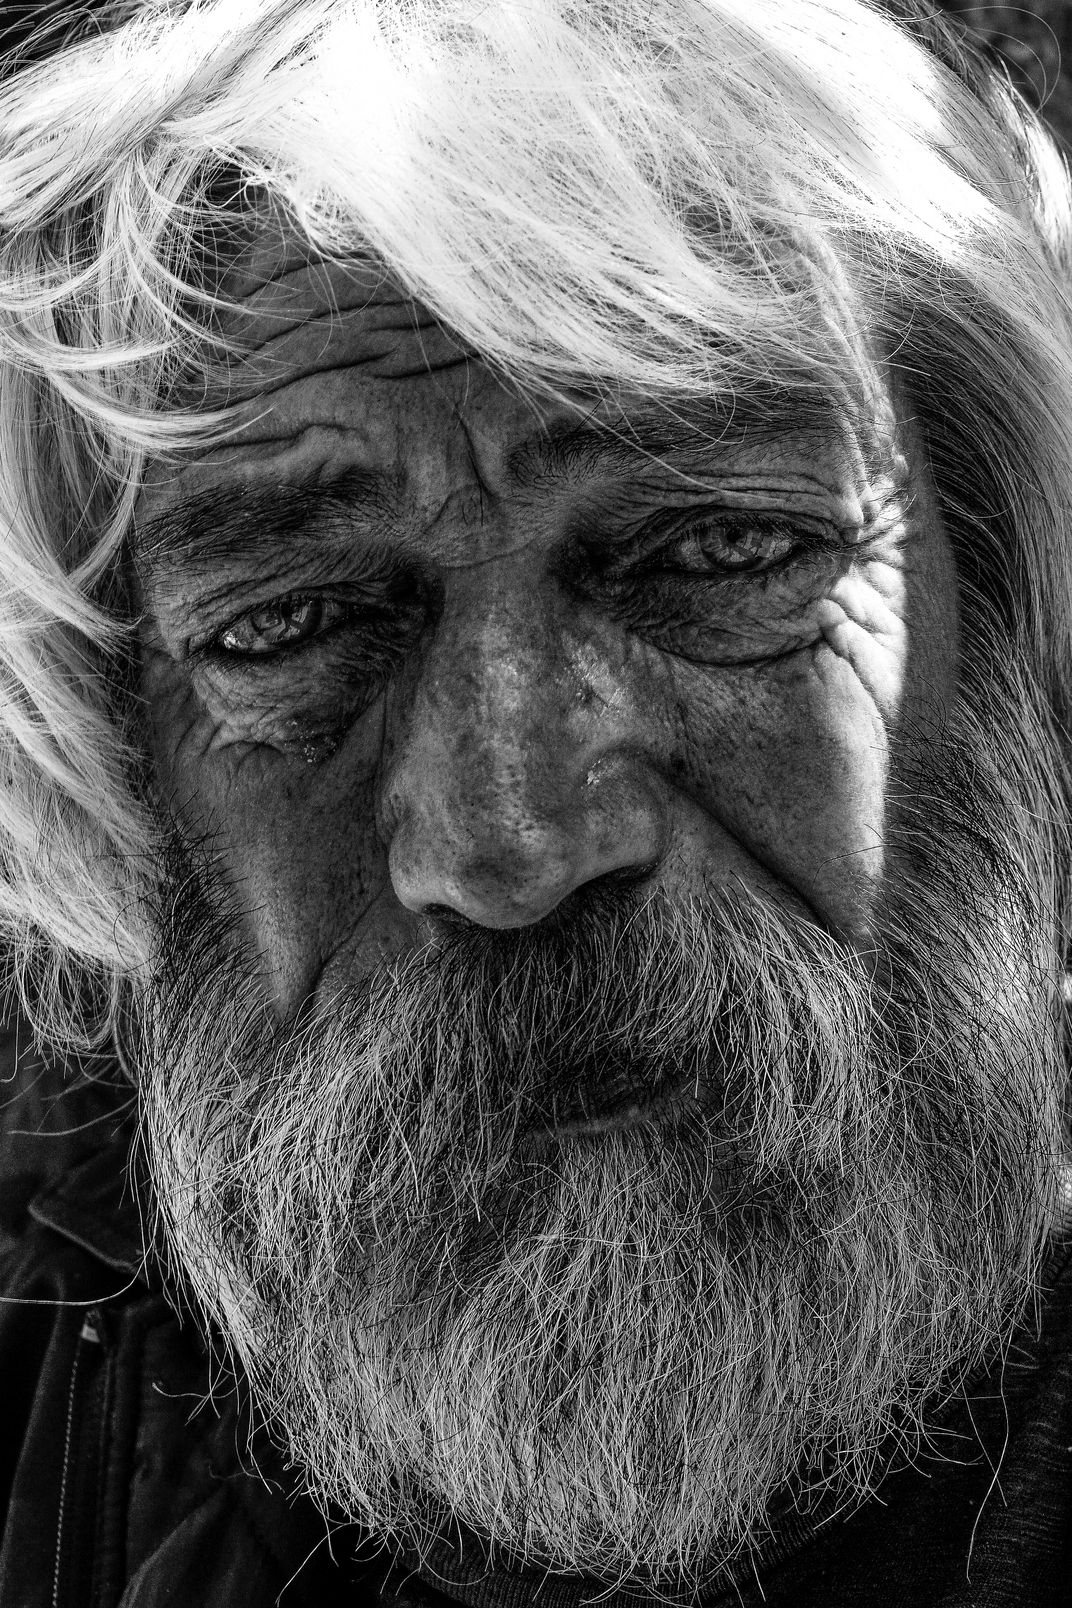 Old sad eyes | Smithsonian Photo Contest | Smithsonian Magazine